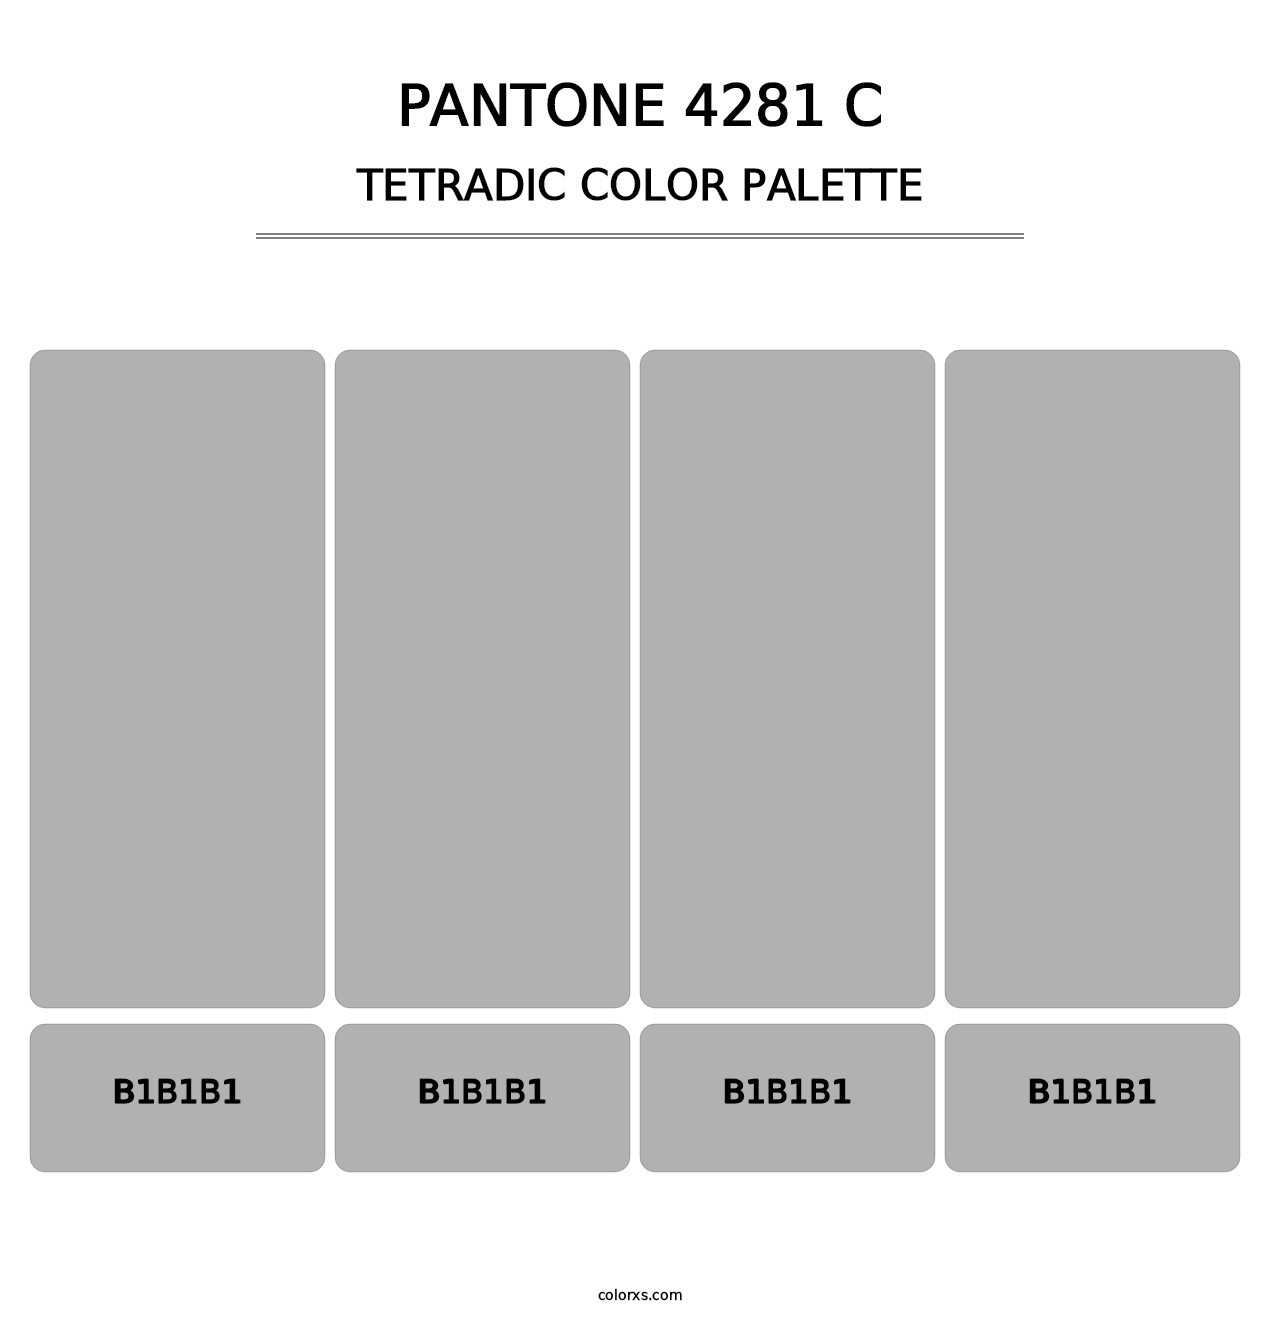 PANTONE 4281 C - Tetradic Color Palette